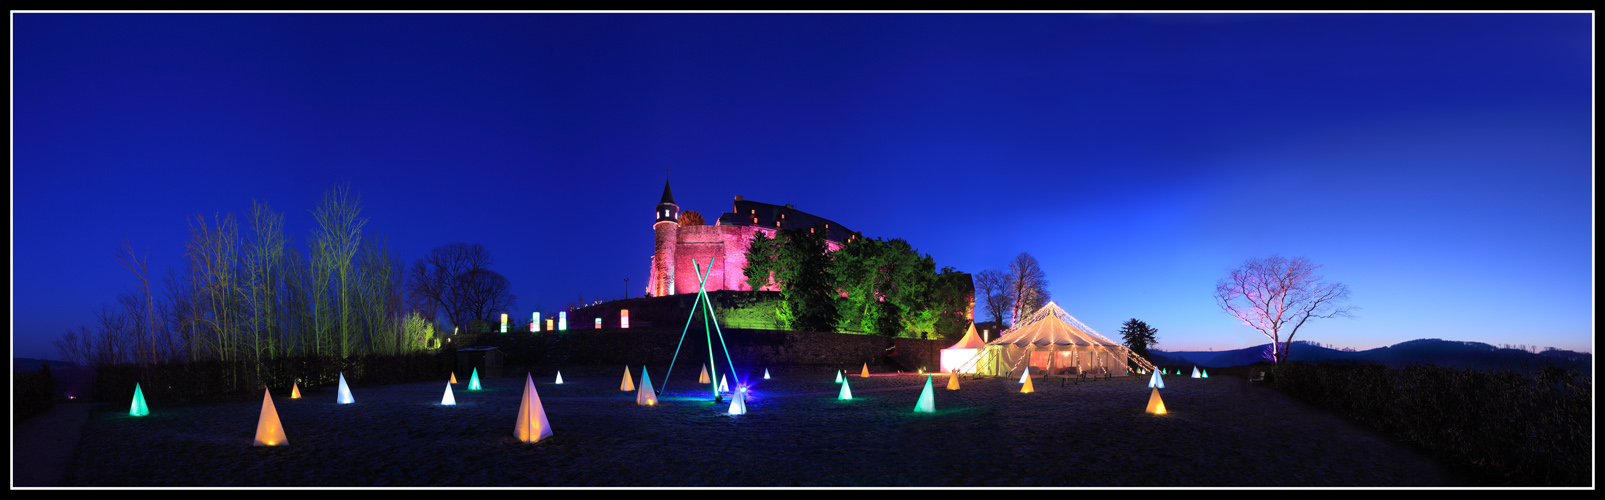 Lichterspiele am Schloss Hohenlimburg